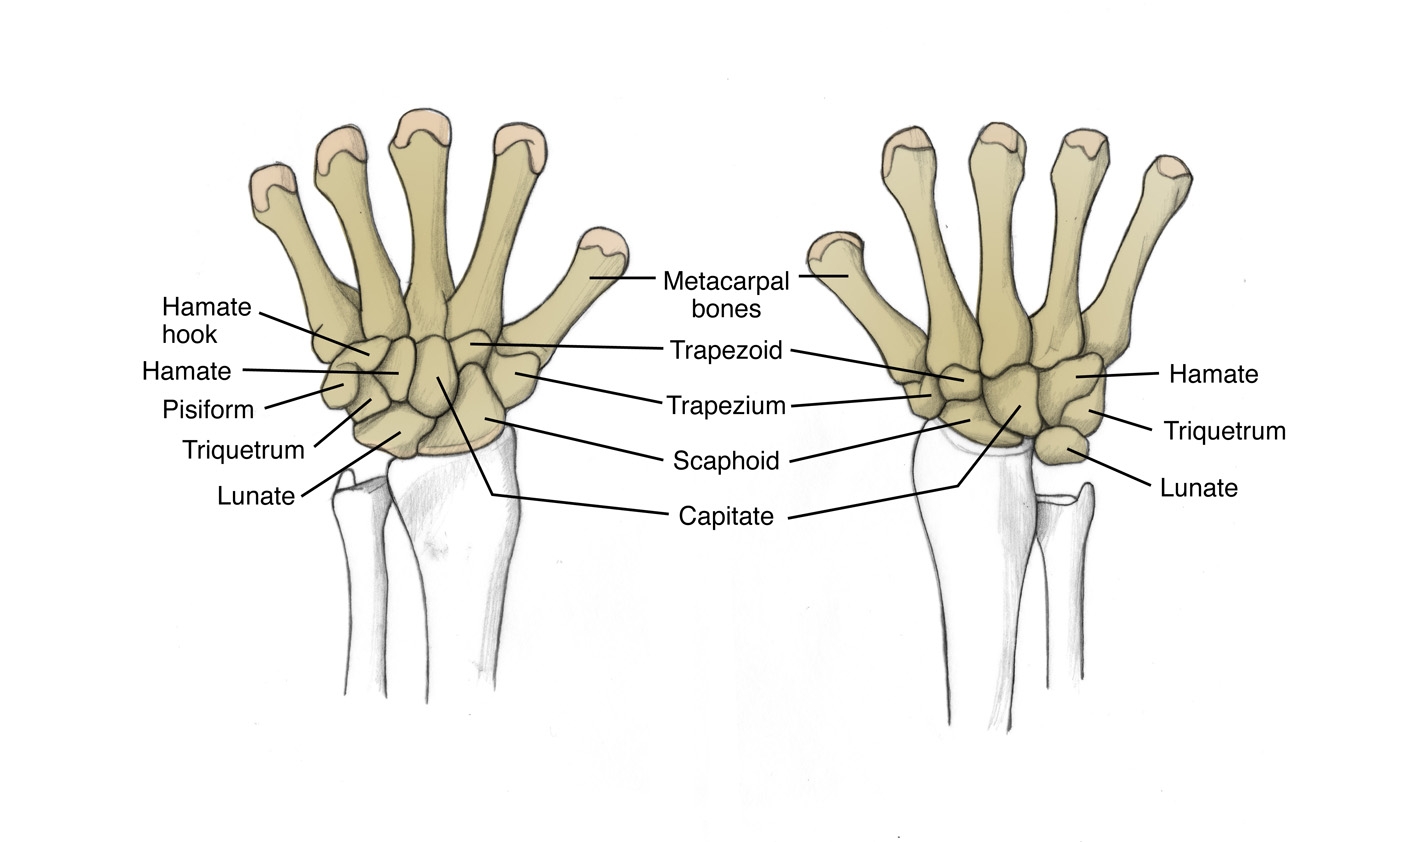 Figure 1: The anatomical arrangement of the wrist carpal bones